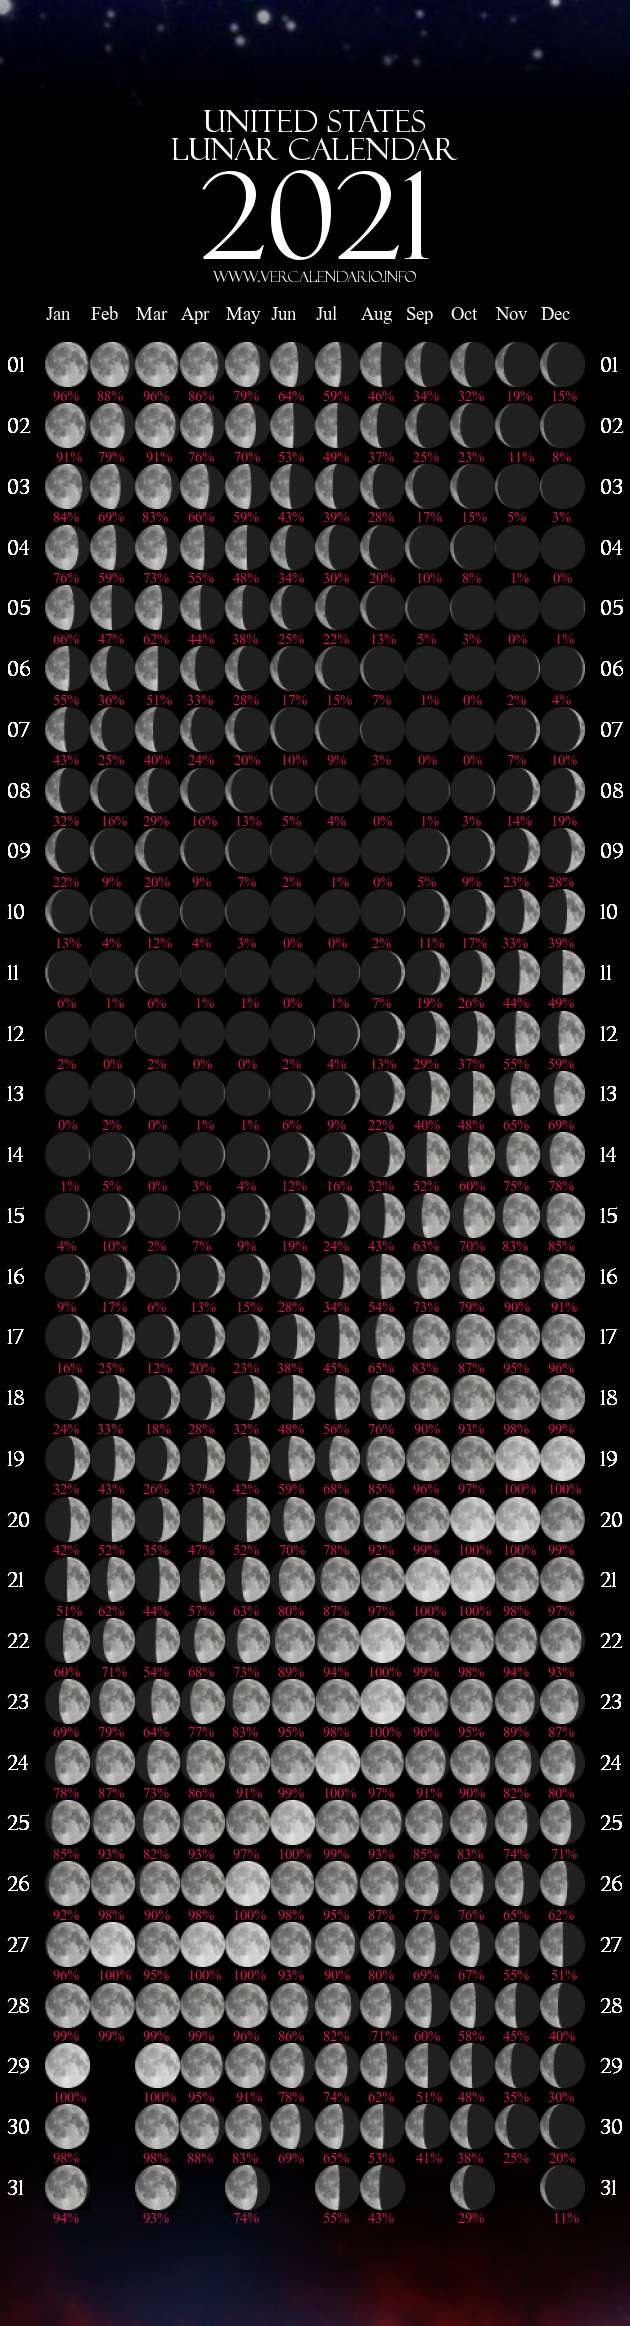 Lunar Calendar 2021 (United States)